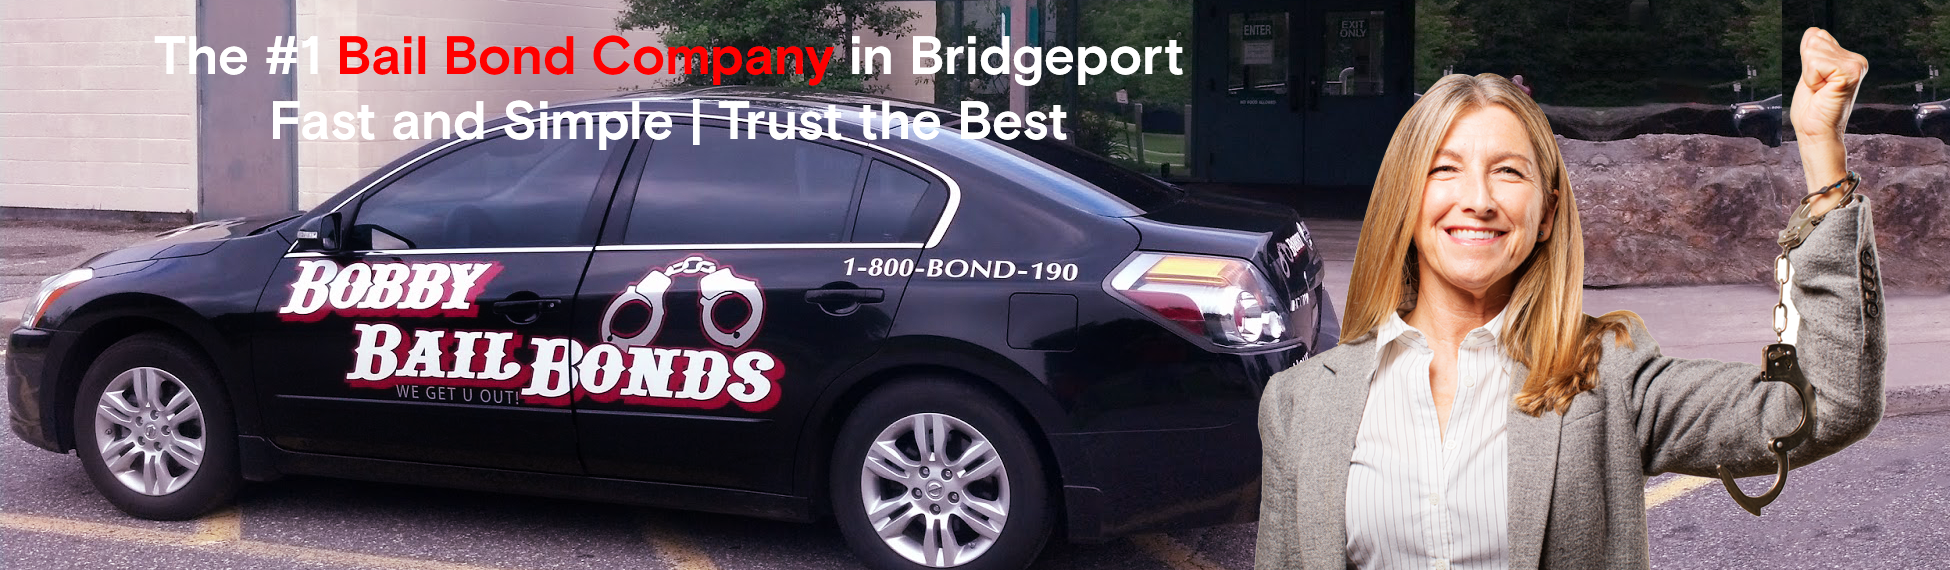 Bobby bail bonds Bridgeport